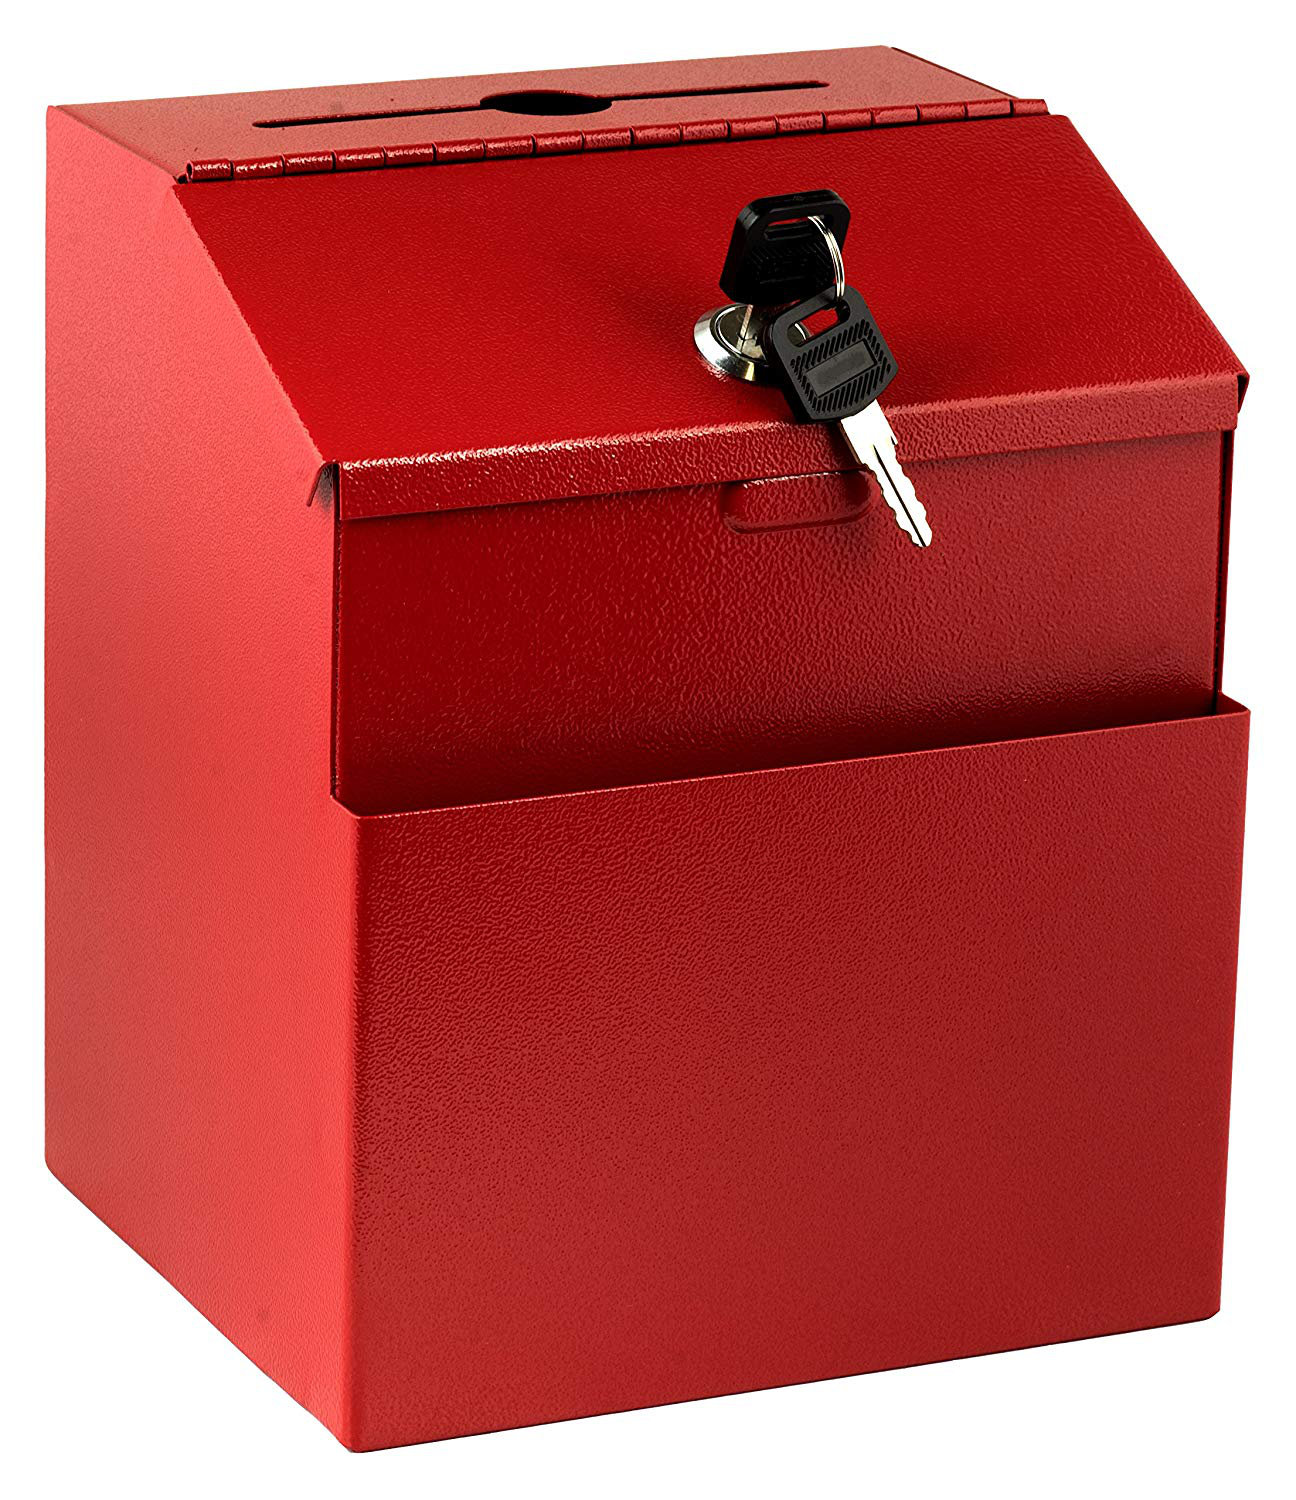 AdirOffice Multi Purpose Wall Mountable Suggestion Box 9.75 x 7 x 3 Red 